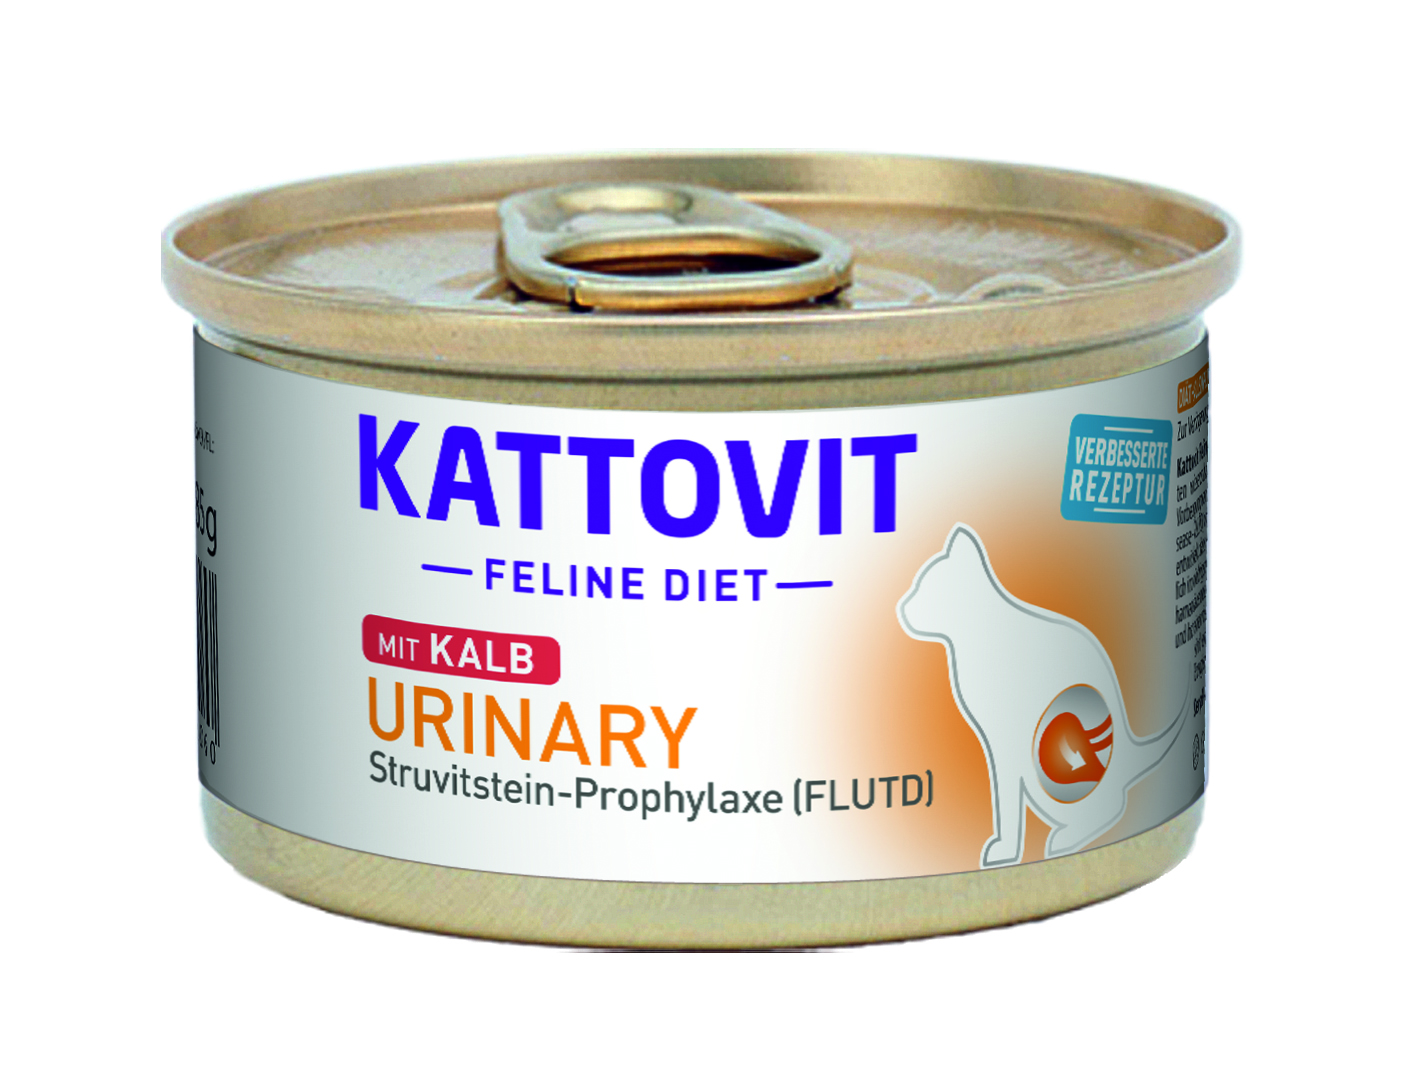 Kattovit Feline Diet Urinary - Struvitstein-Prophylaxe FLUTD (